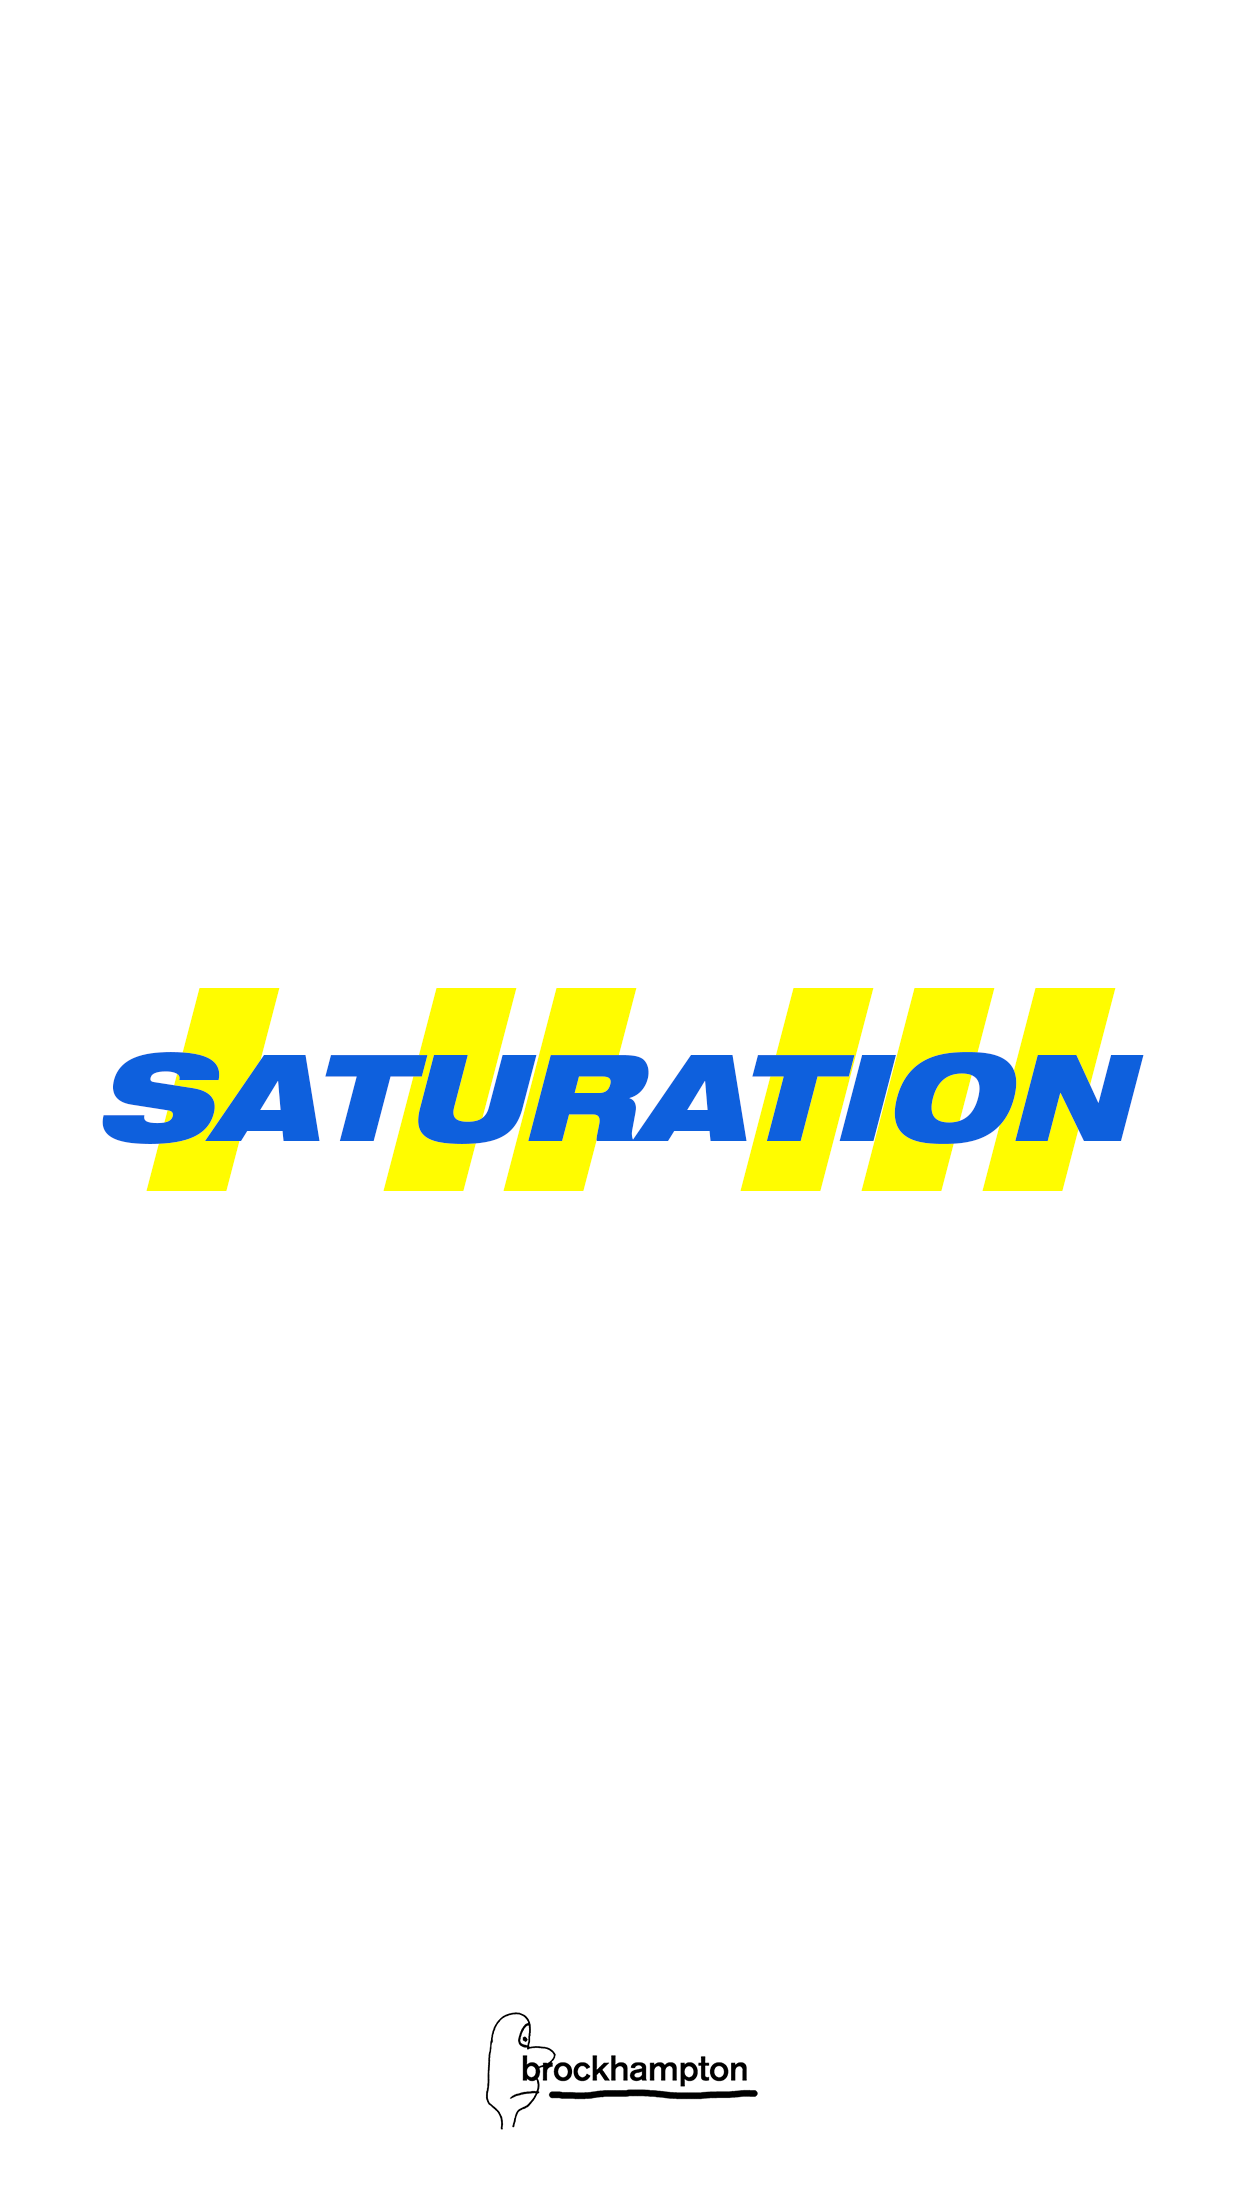 Brockhampton Logo - Saturation Trilogy shirt-inspired phone wallpapers - Album on Imgur